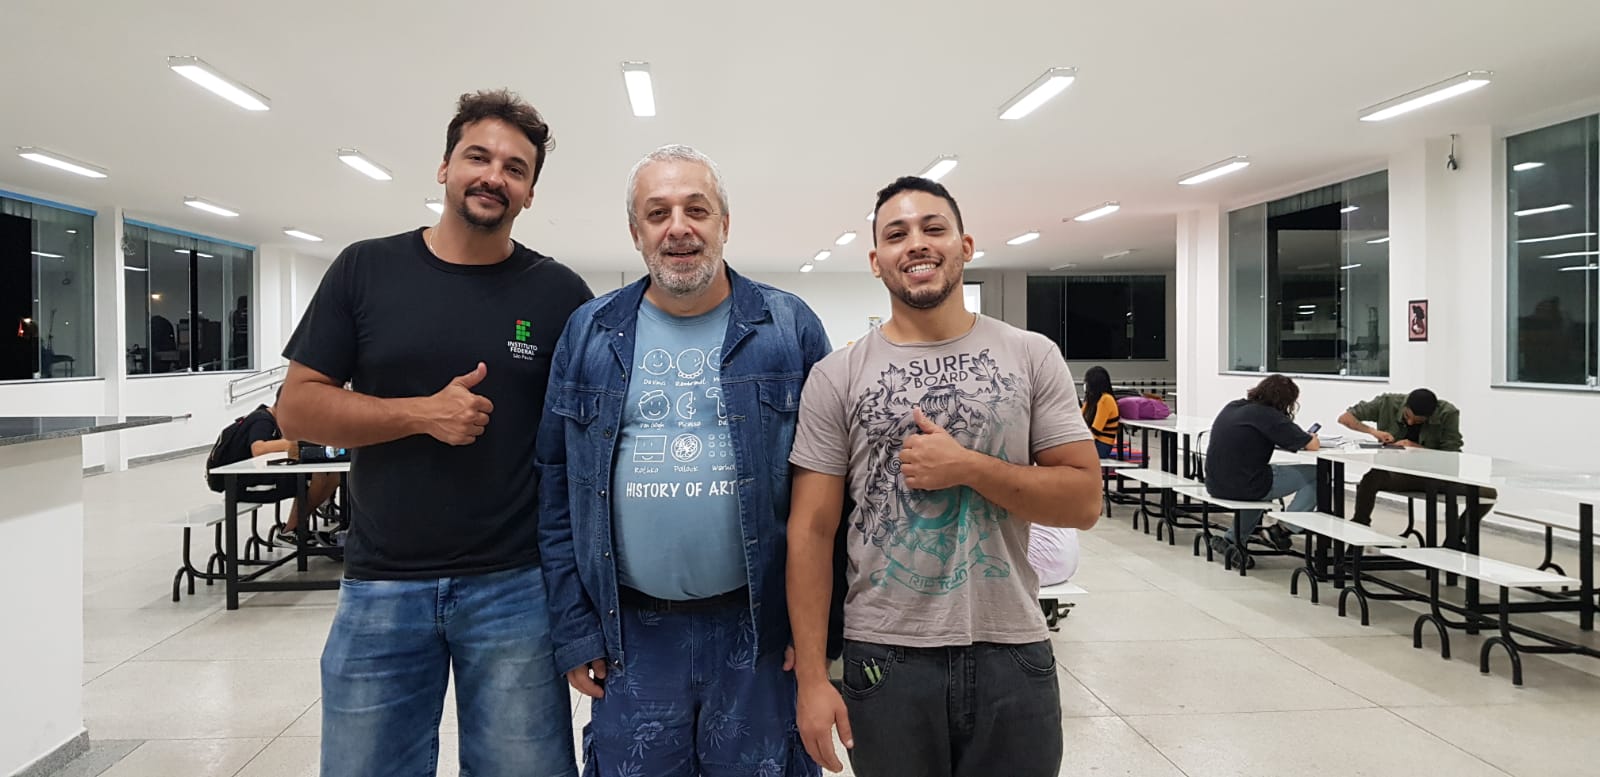 Imagem 5 - Luiz Gustavo, Ricardo e Thyago